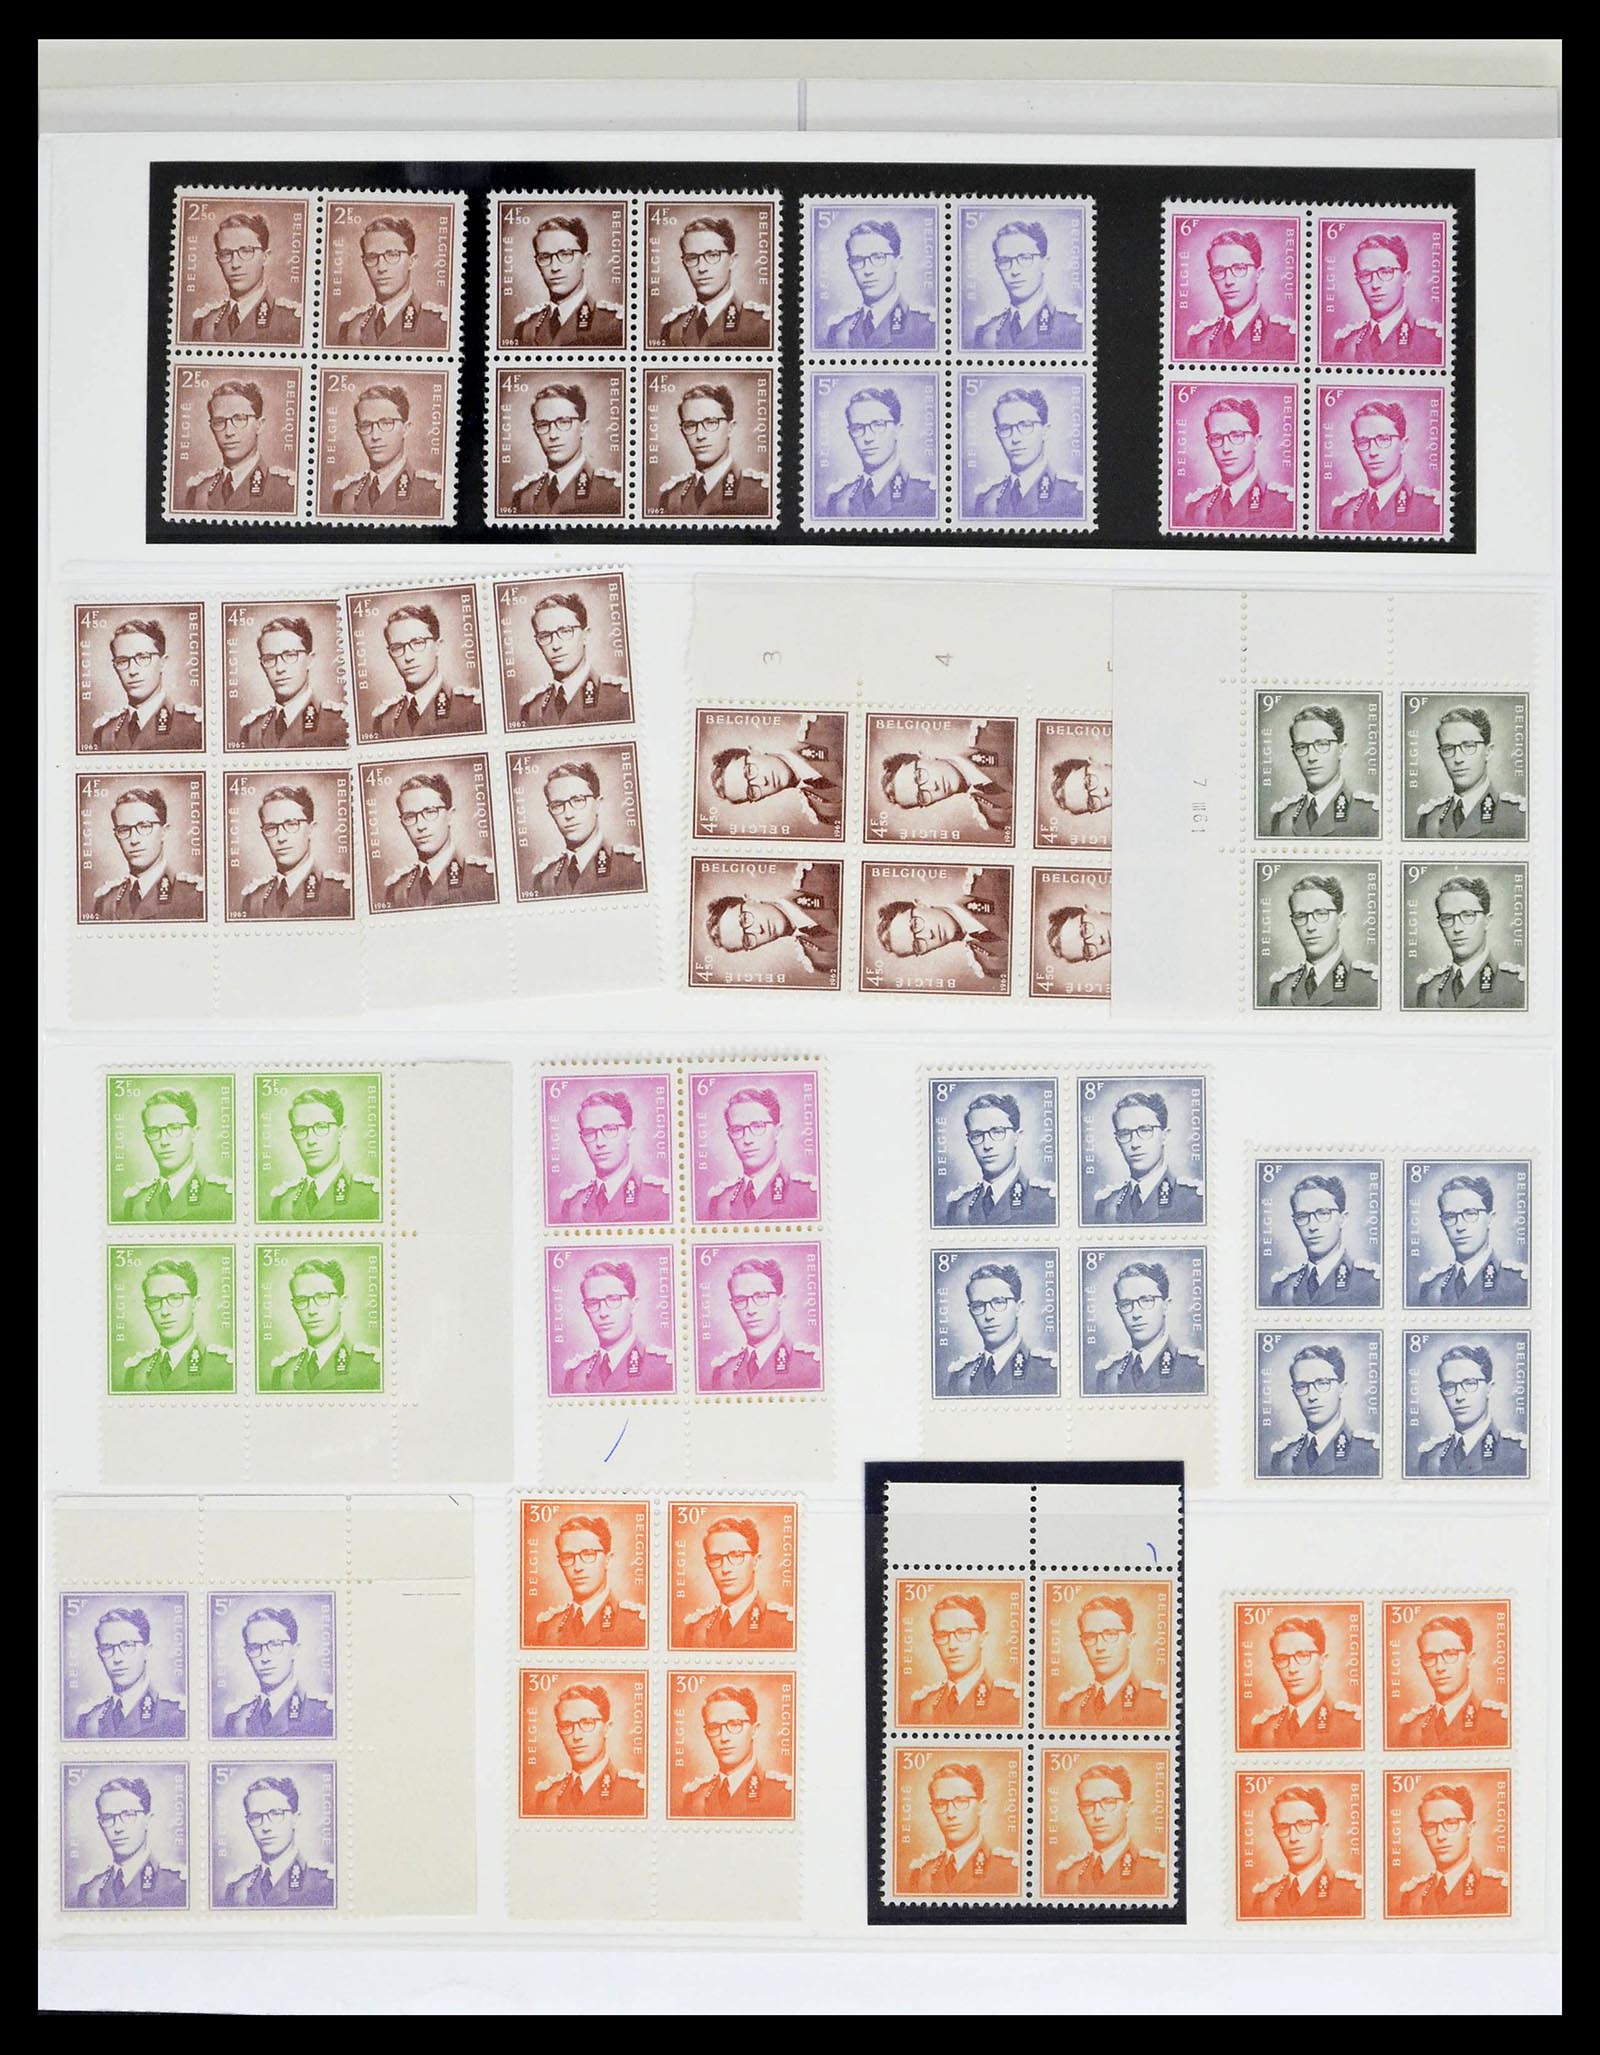 39229 0018 - Stamp collection 39229 Belgium Boudewijn with glasses 1952-1975.